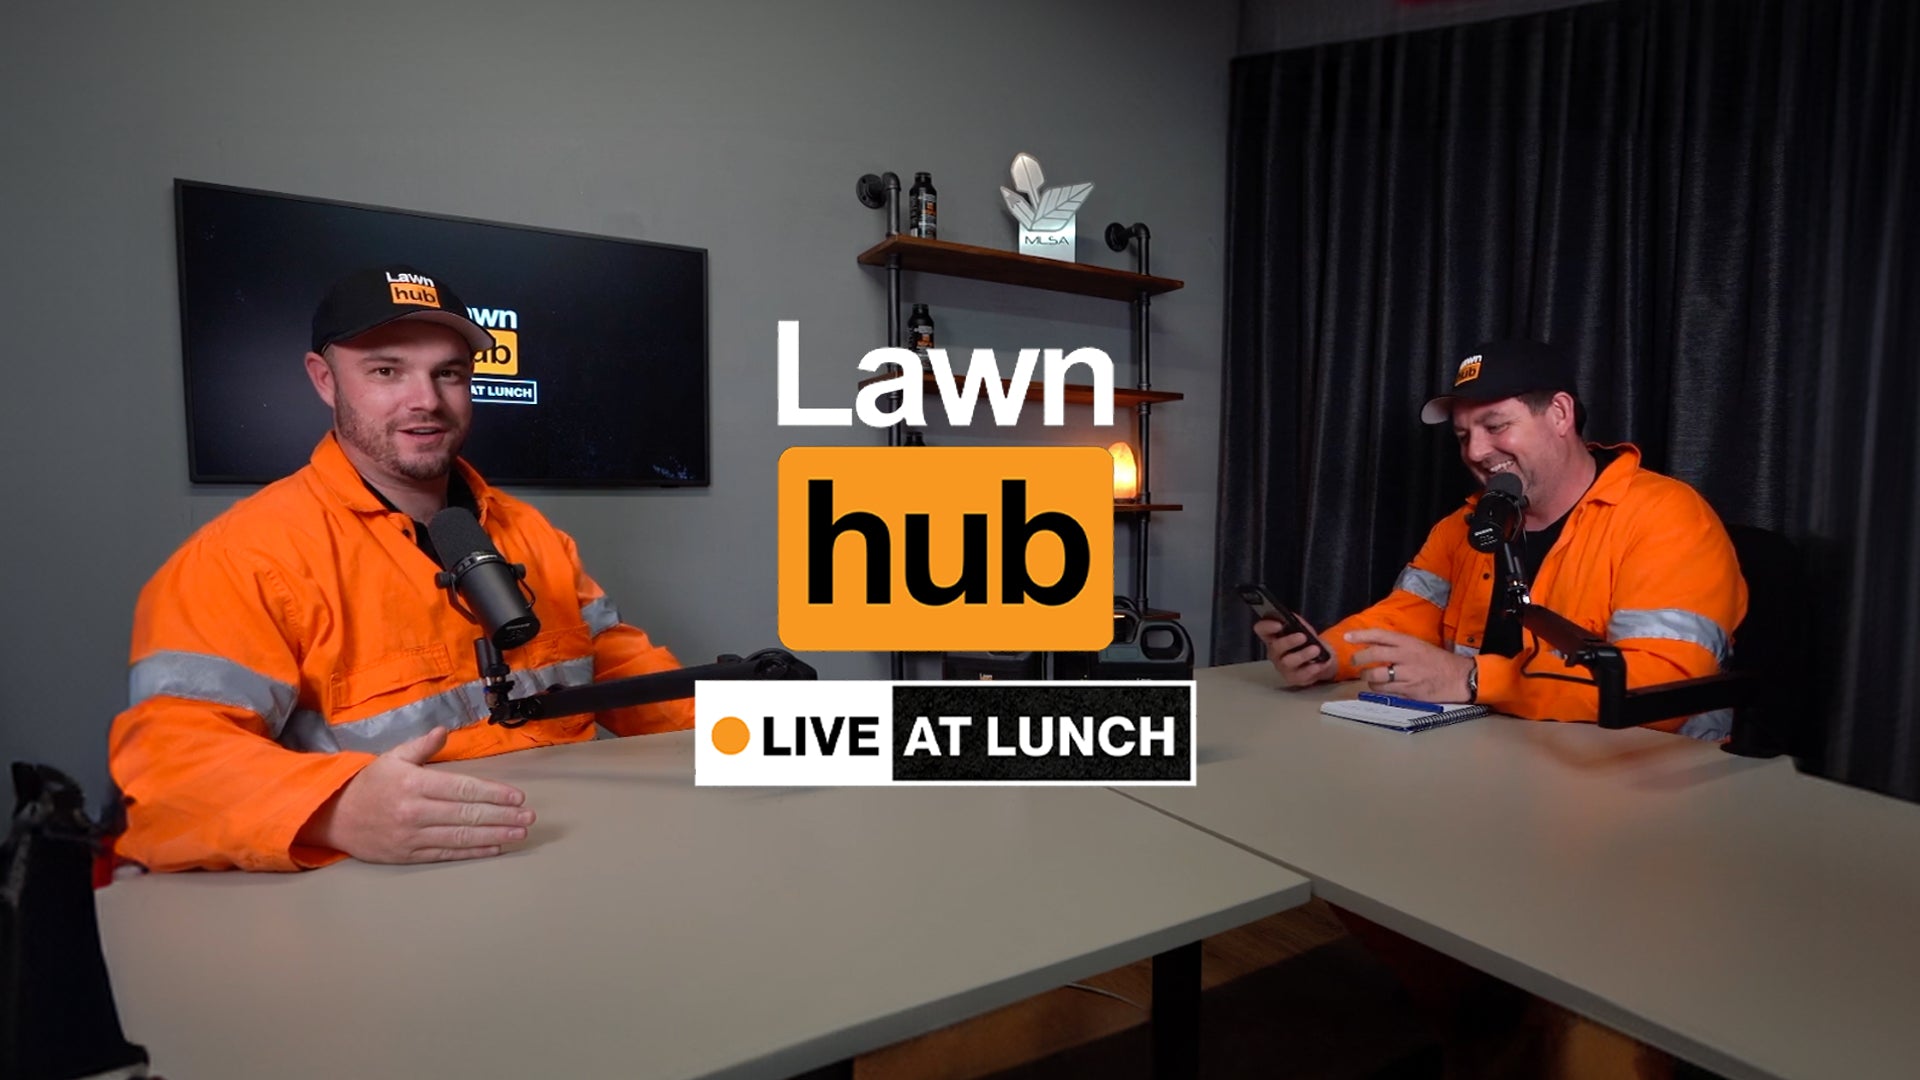 Lawnhub Live at Lunch